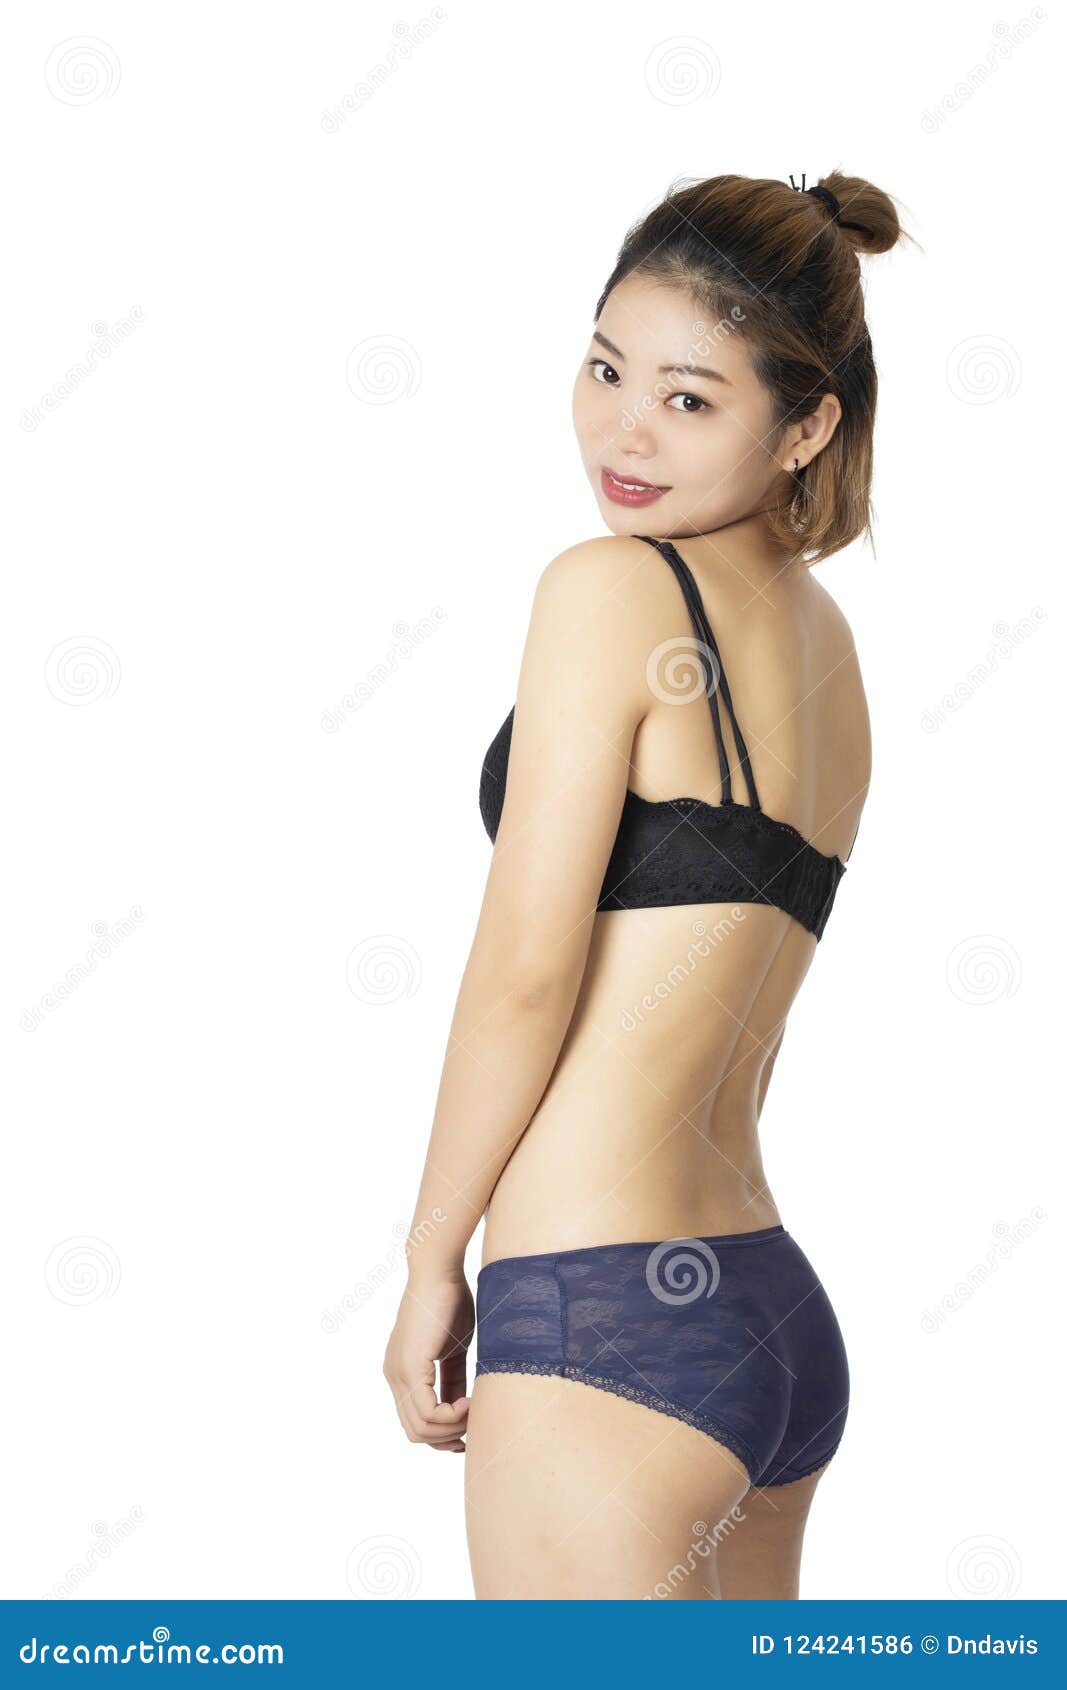 bernardo marti add photo asian woman in panties